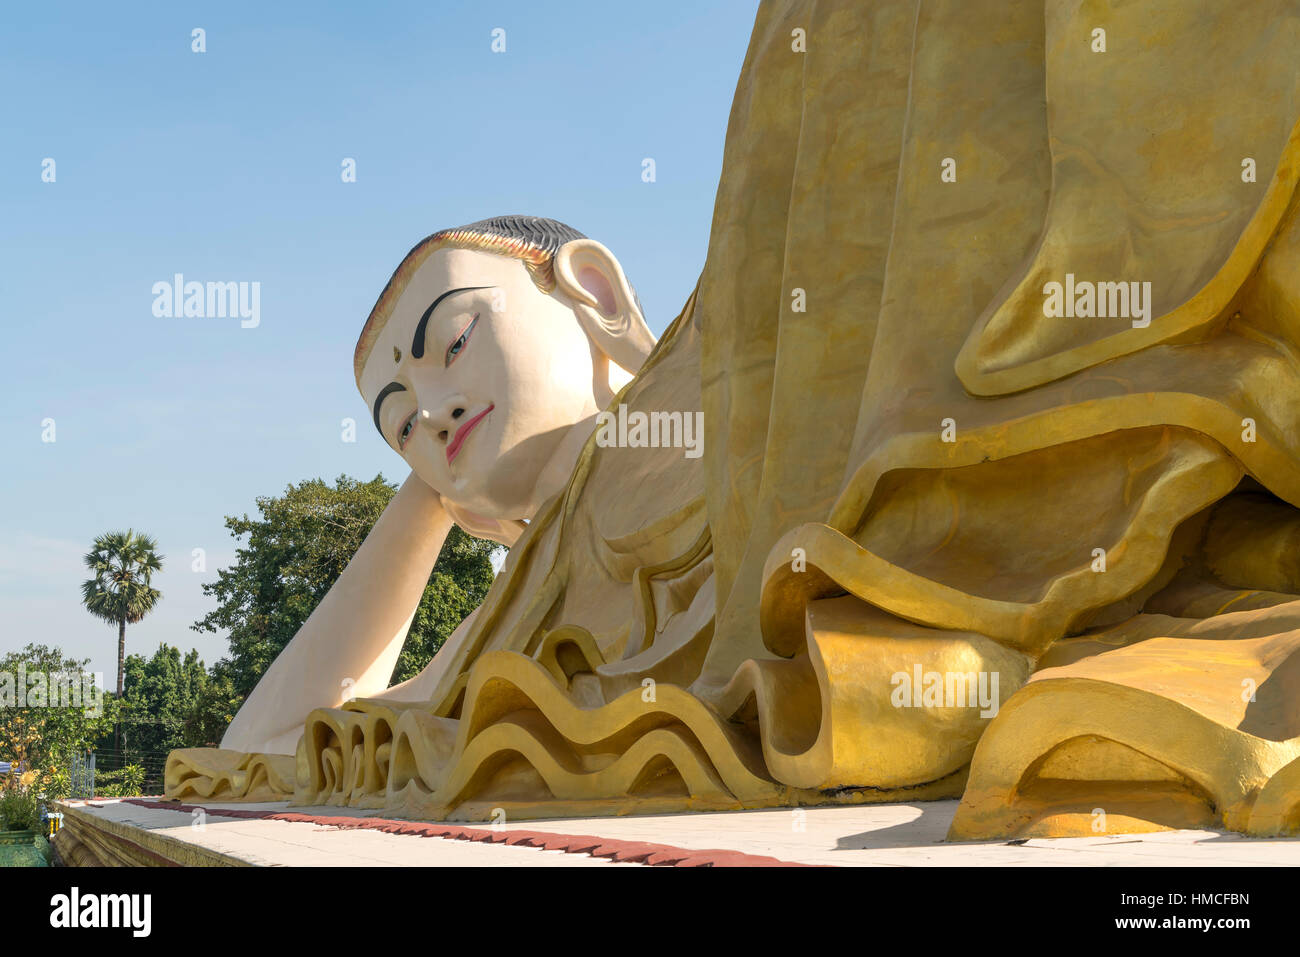 Il gigante Myatharlyaung Buddha reclinato immagine in Bago, Myanmar, Asia Foto Stock